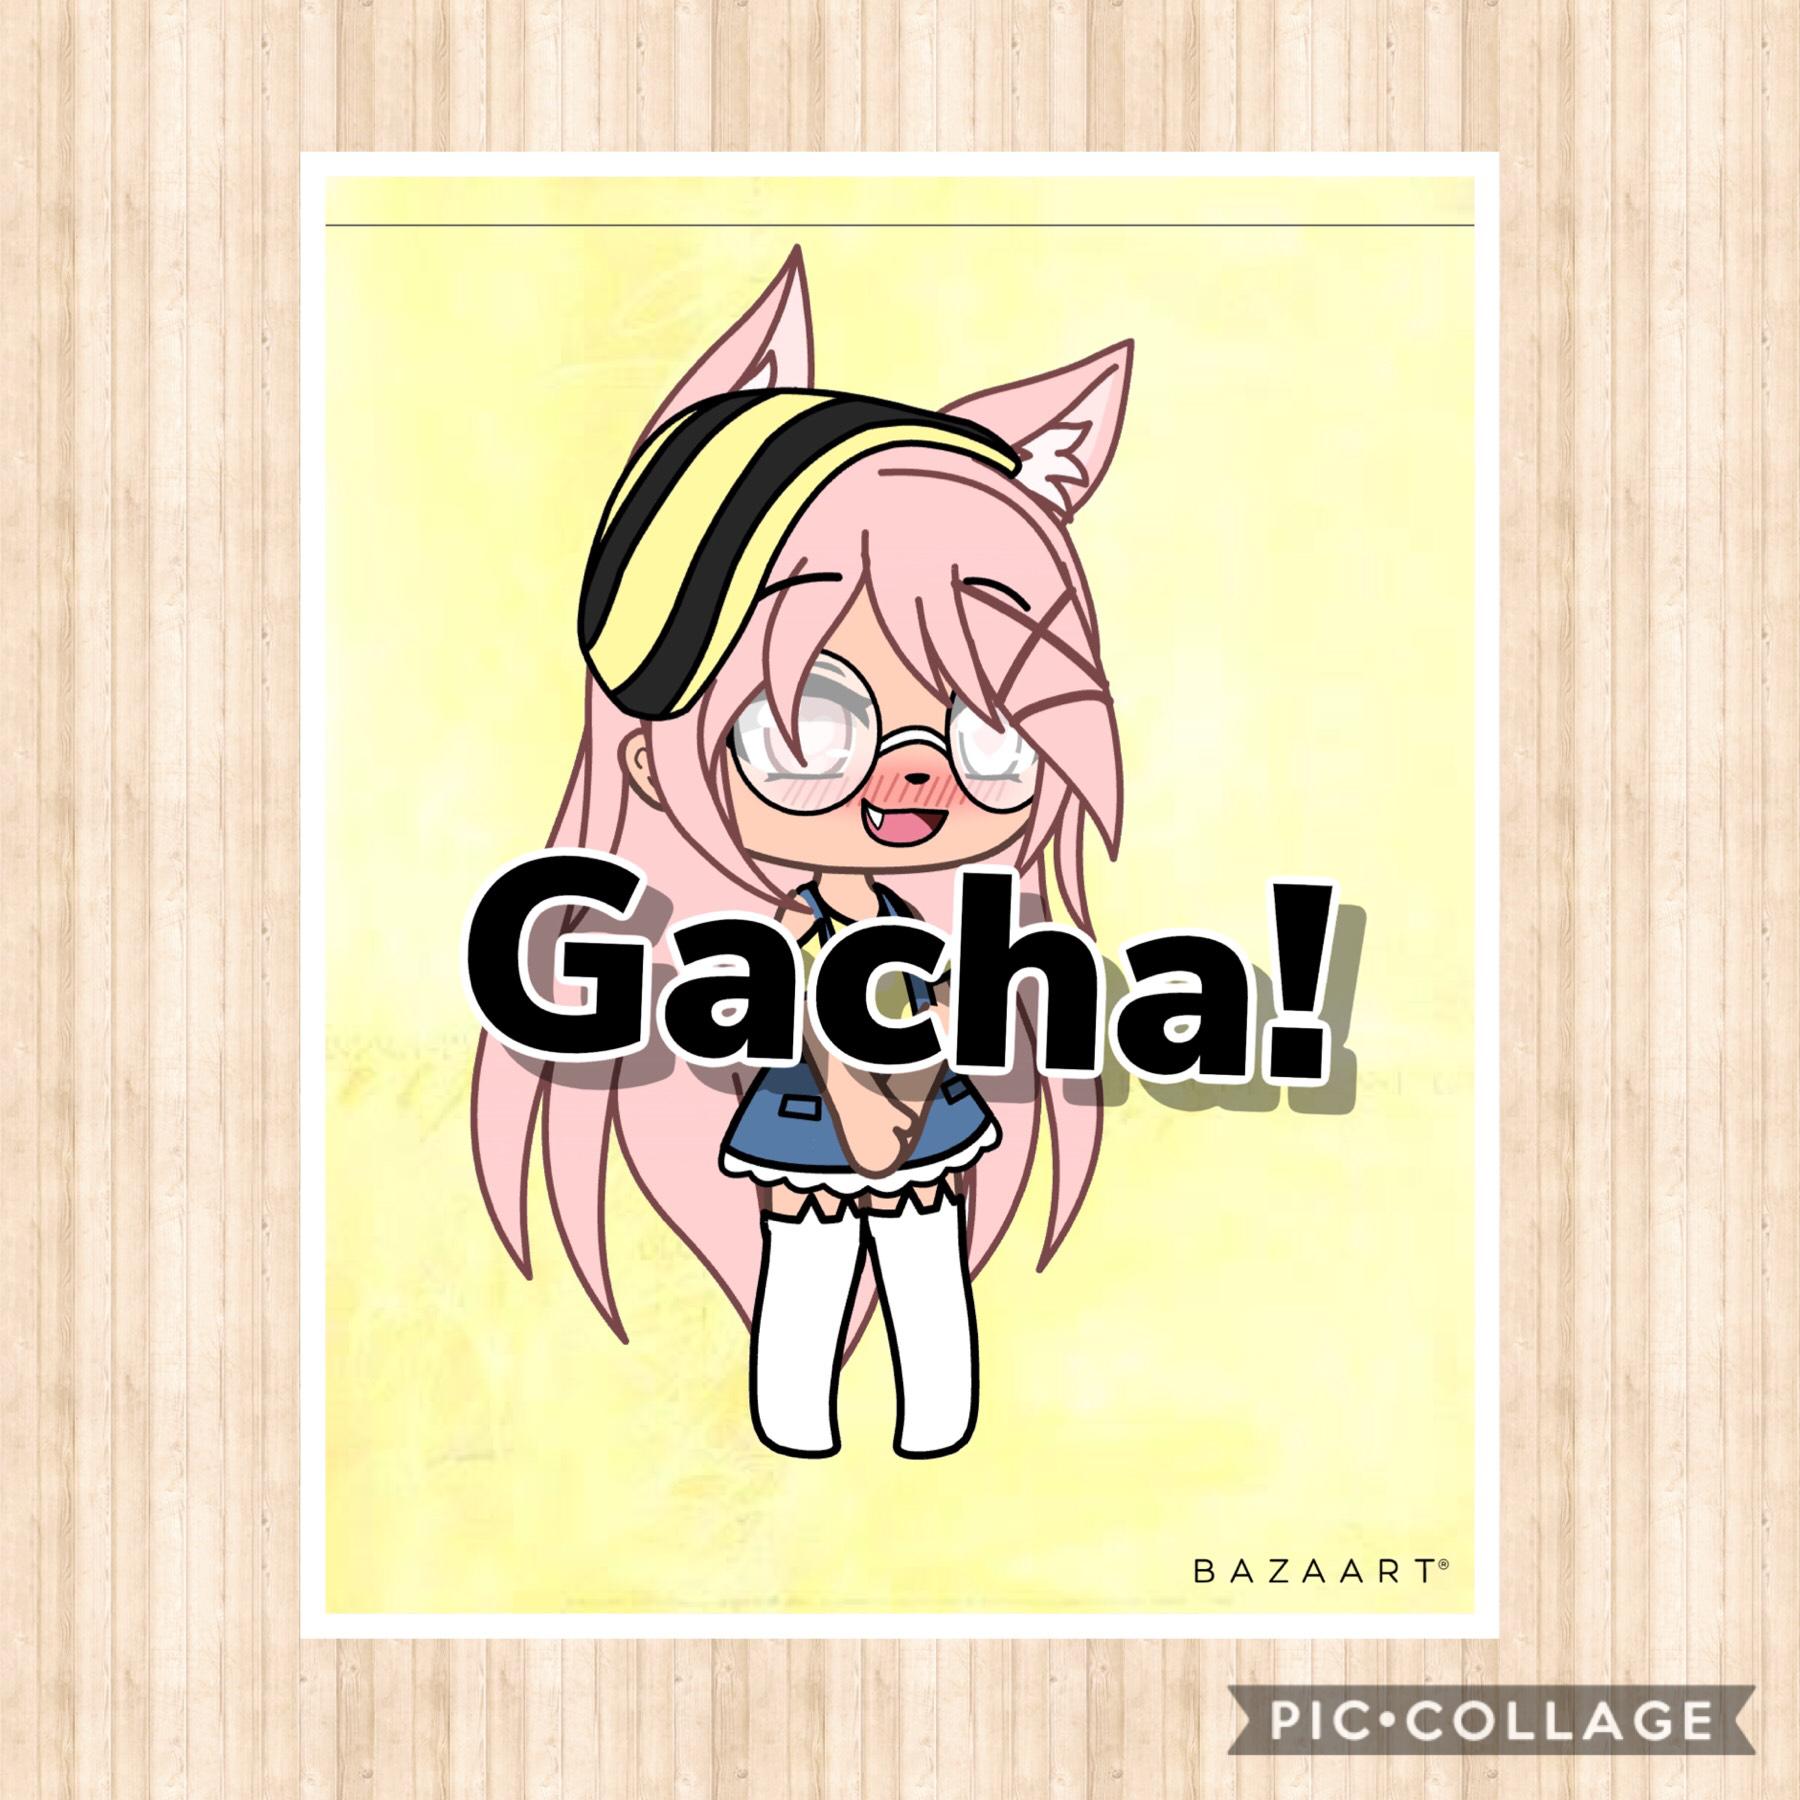 Who likes Gacha?